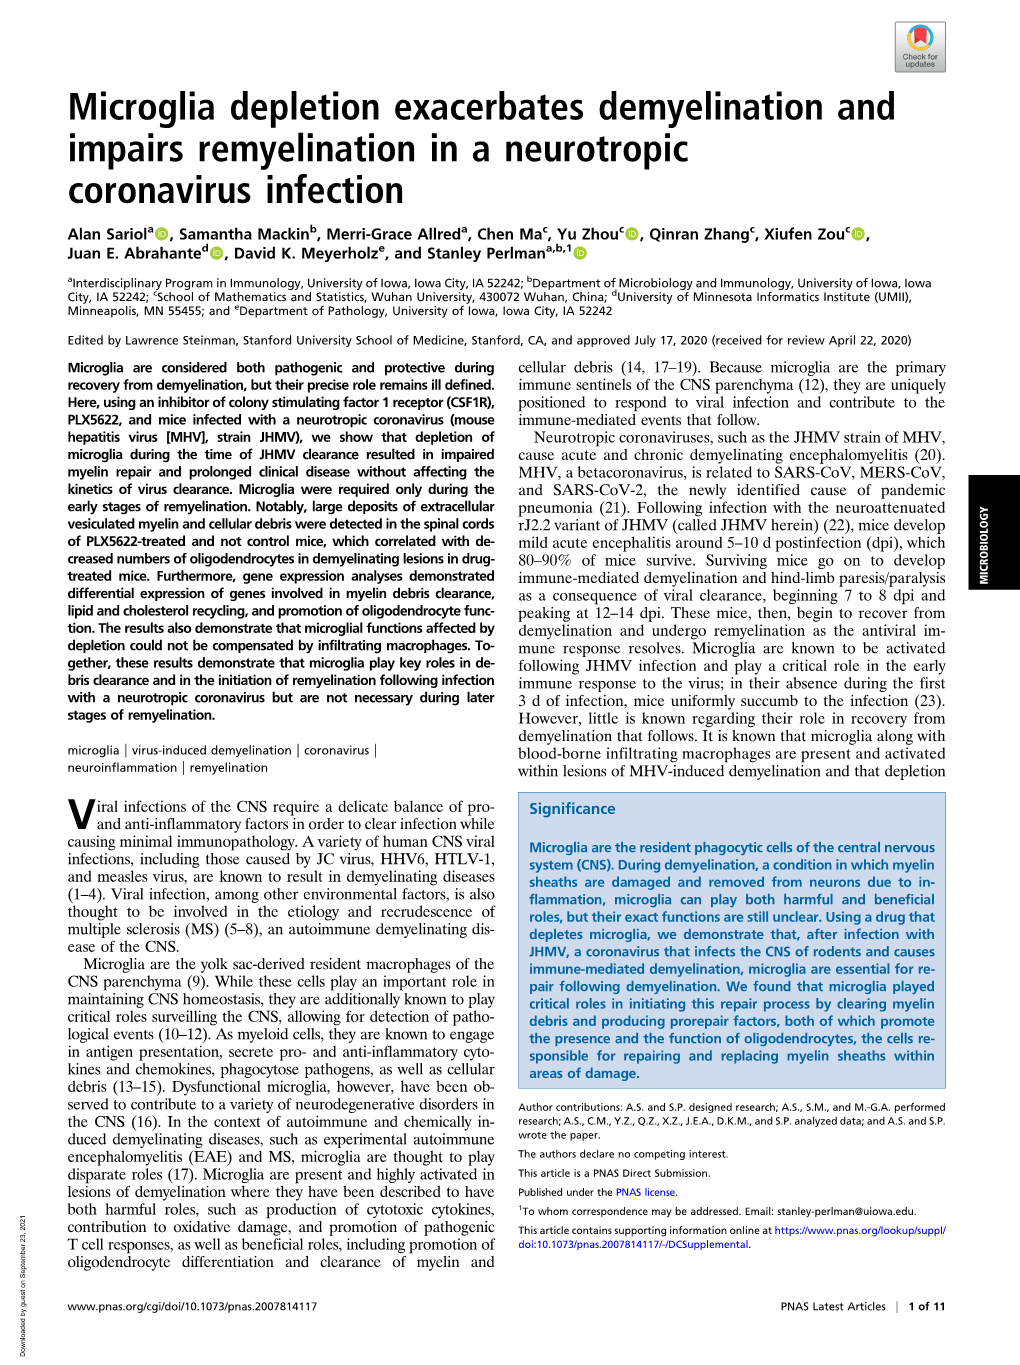 Microglia Depletion Exacerbates Demyelination and Impairs Remyelination in a Neurotropic Coronavirus Infection